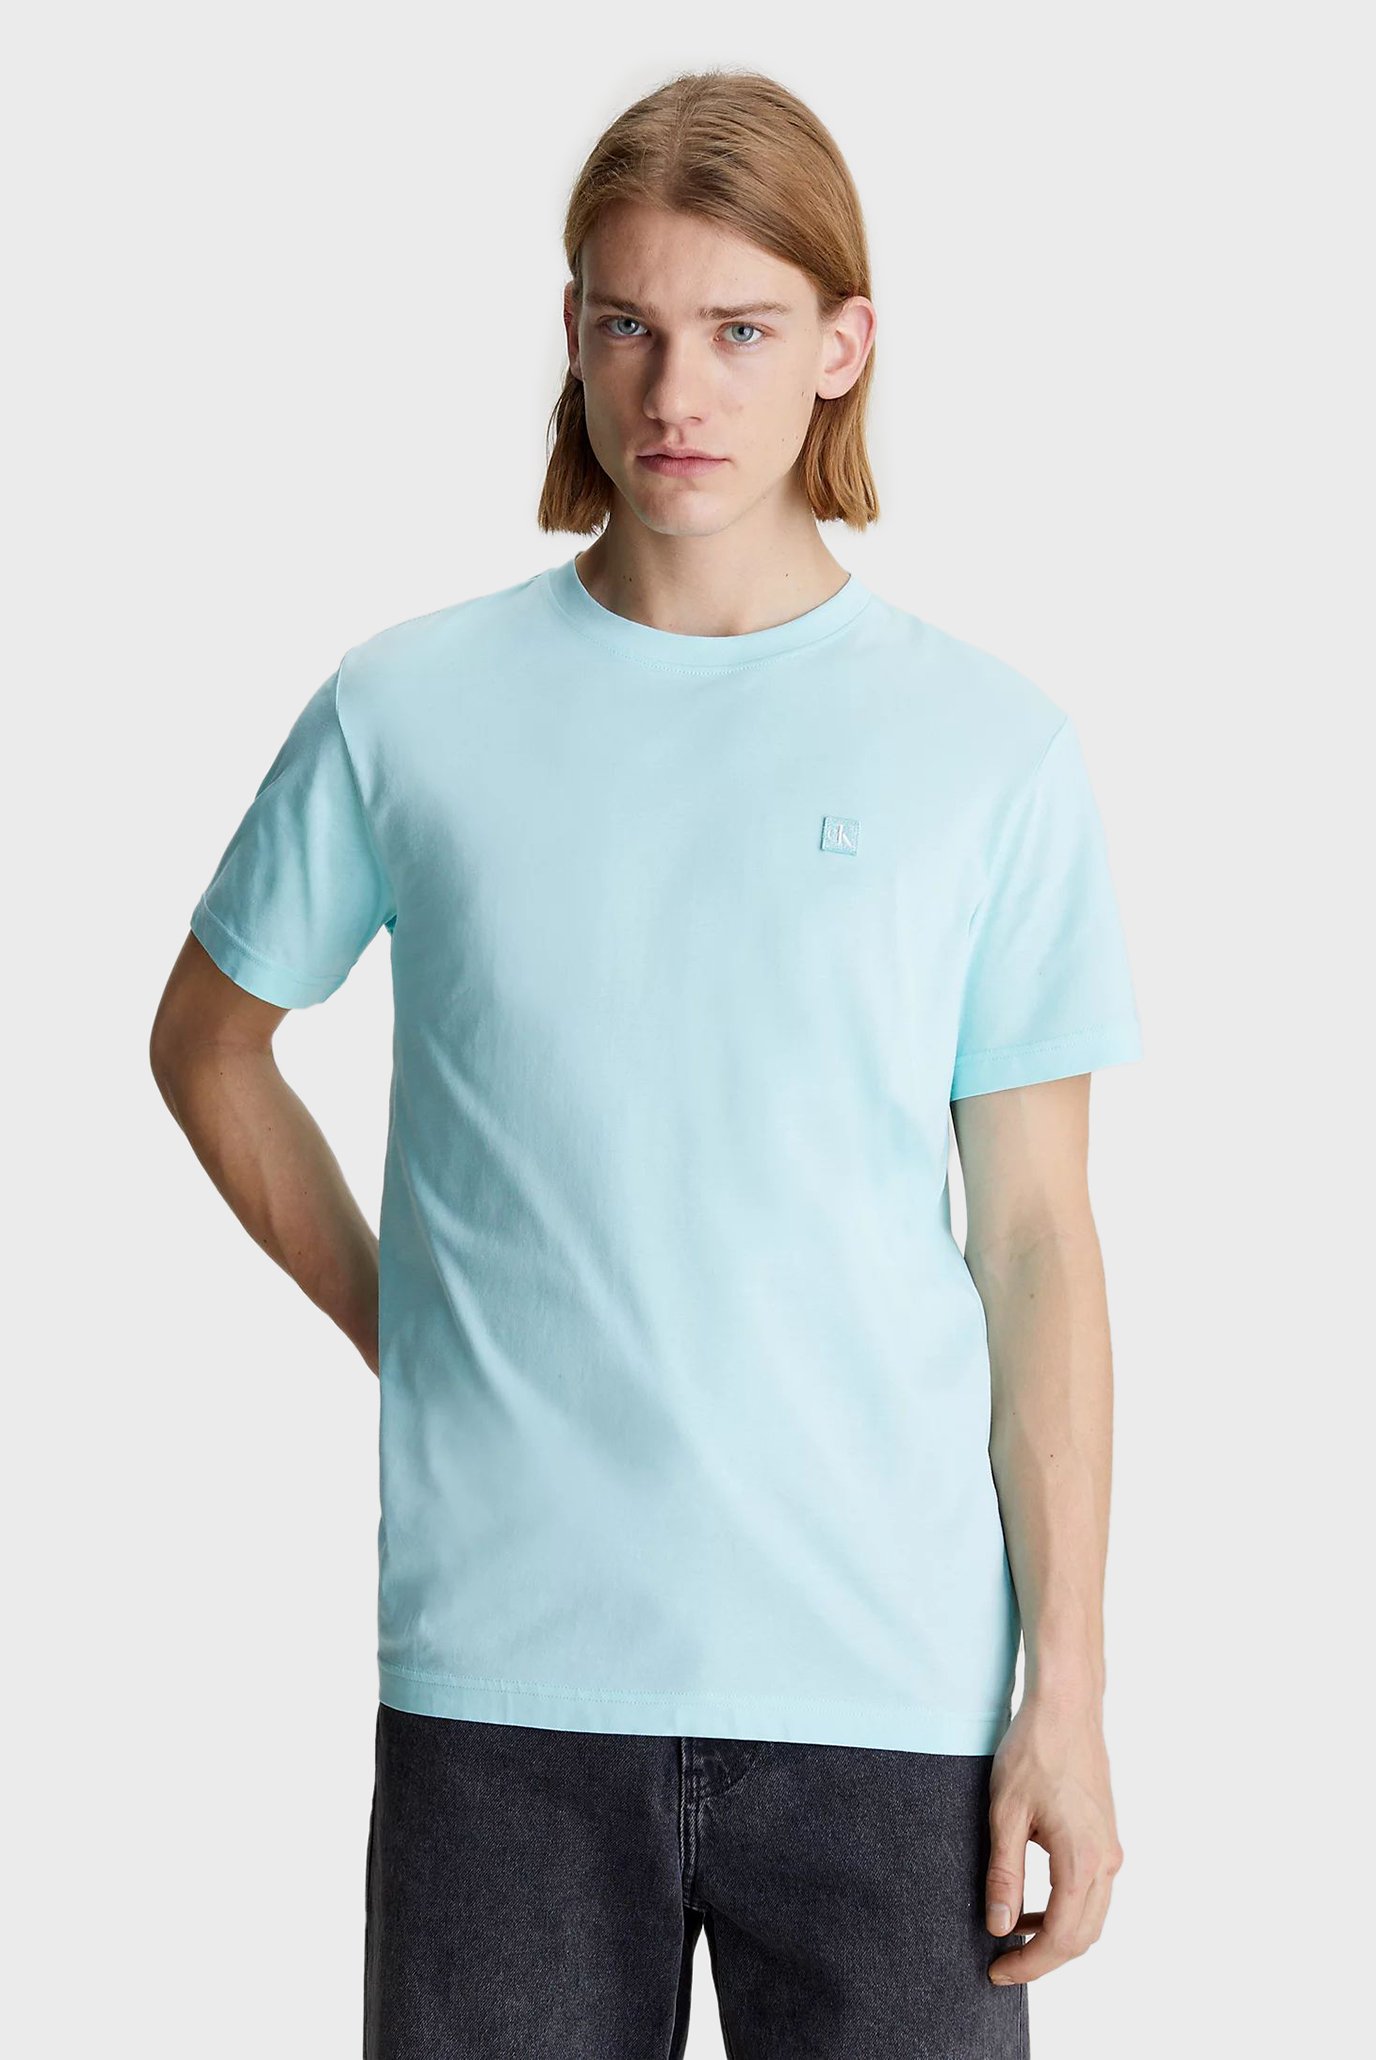 Мужская голубая футболка CK EMBRO BADGE 1